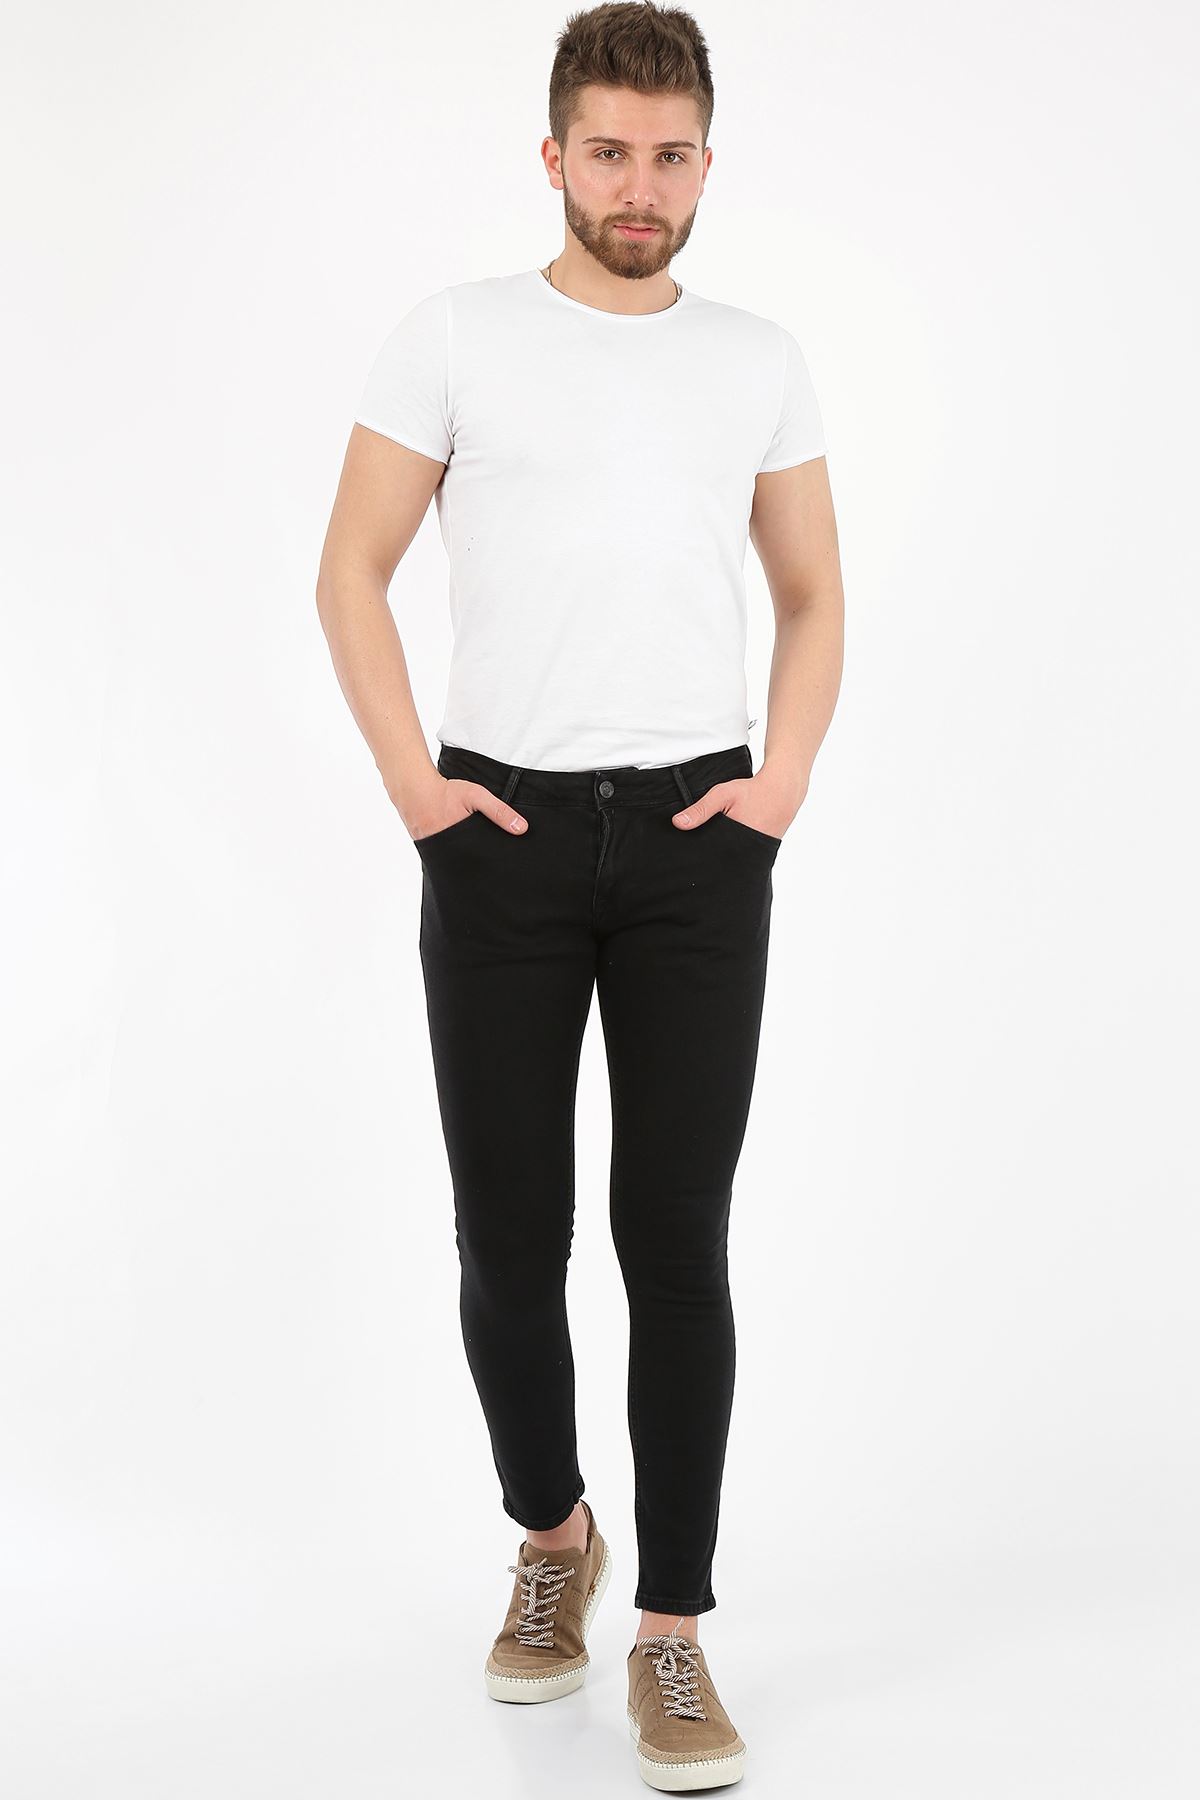 Siyah Süperslim/sknny Fit Fermuarlı Erkek Jeans Pantolon